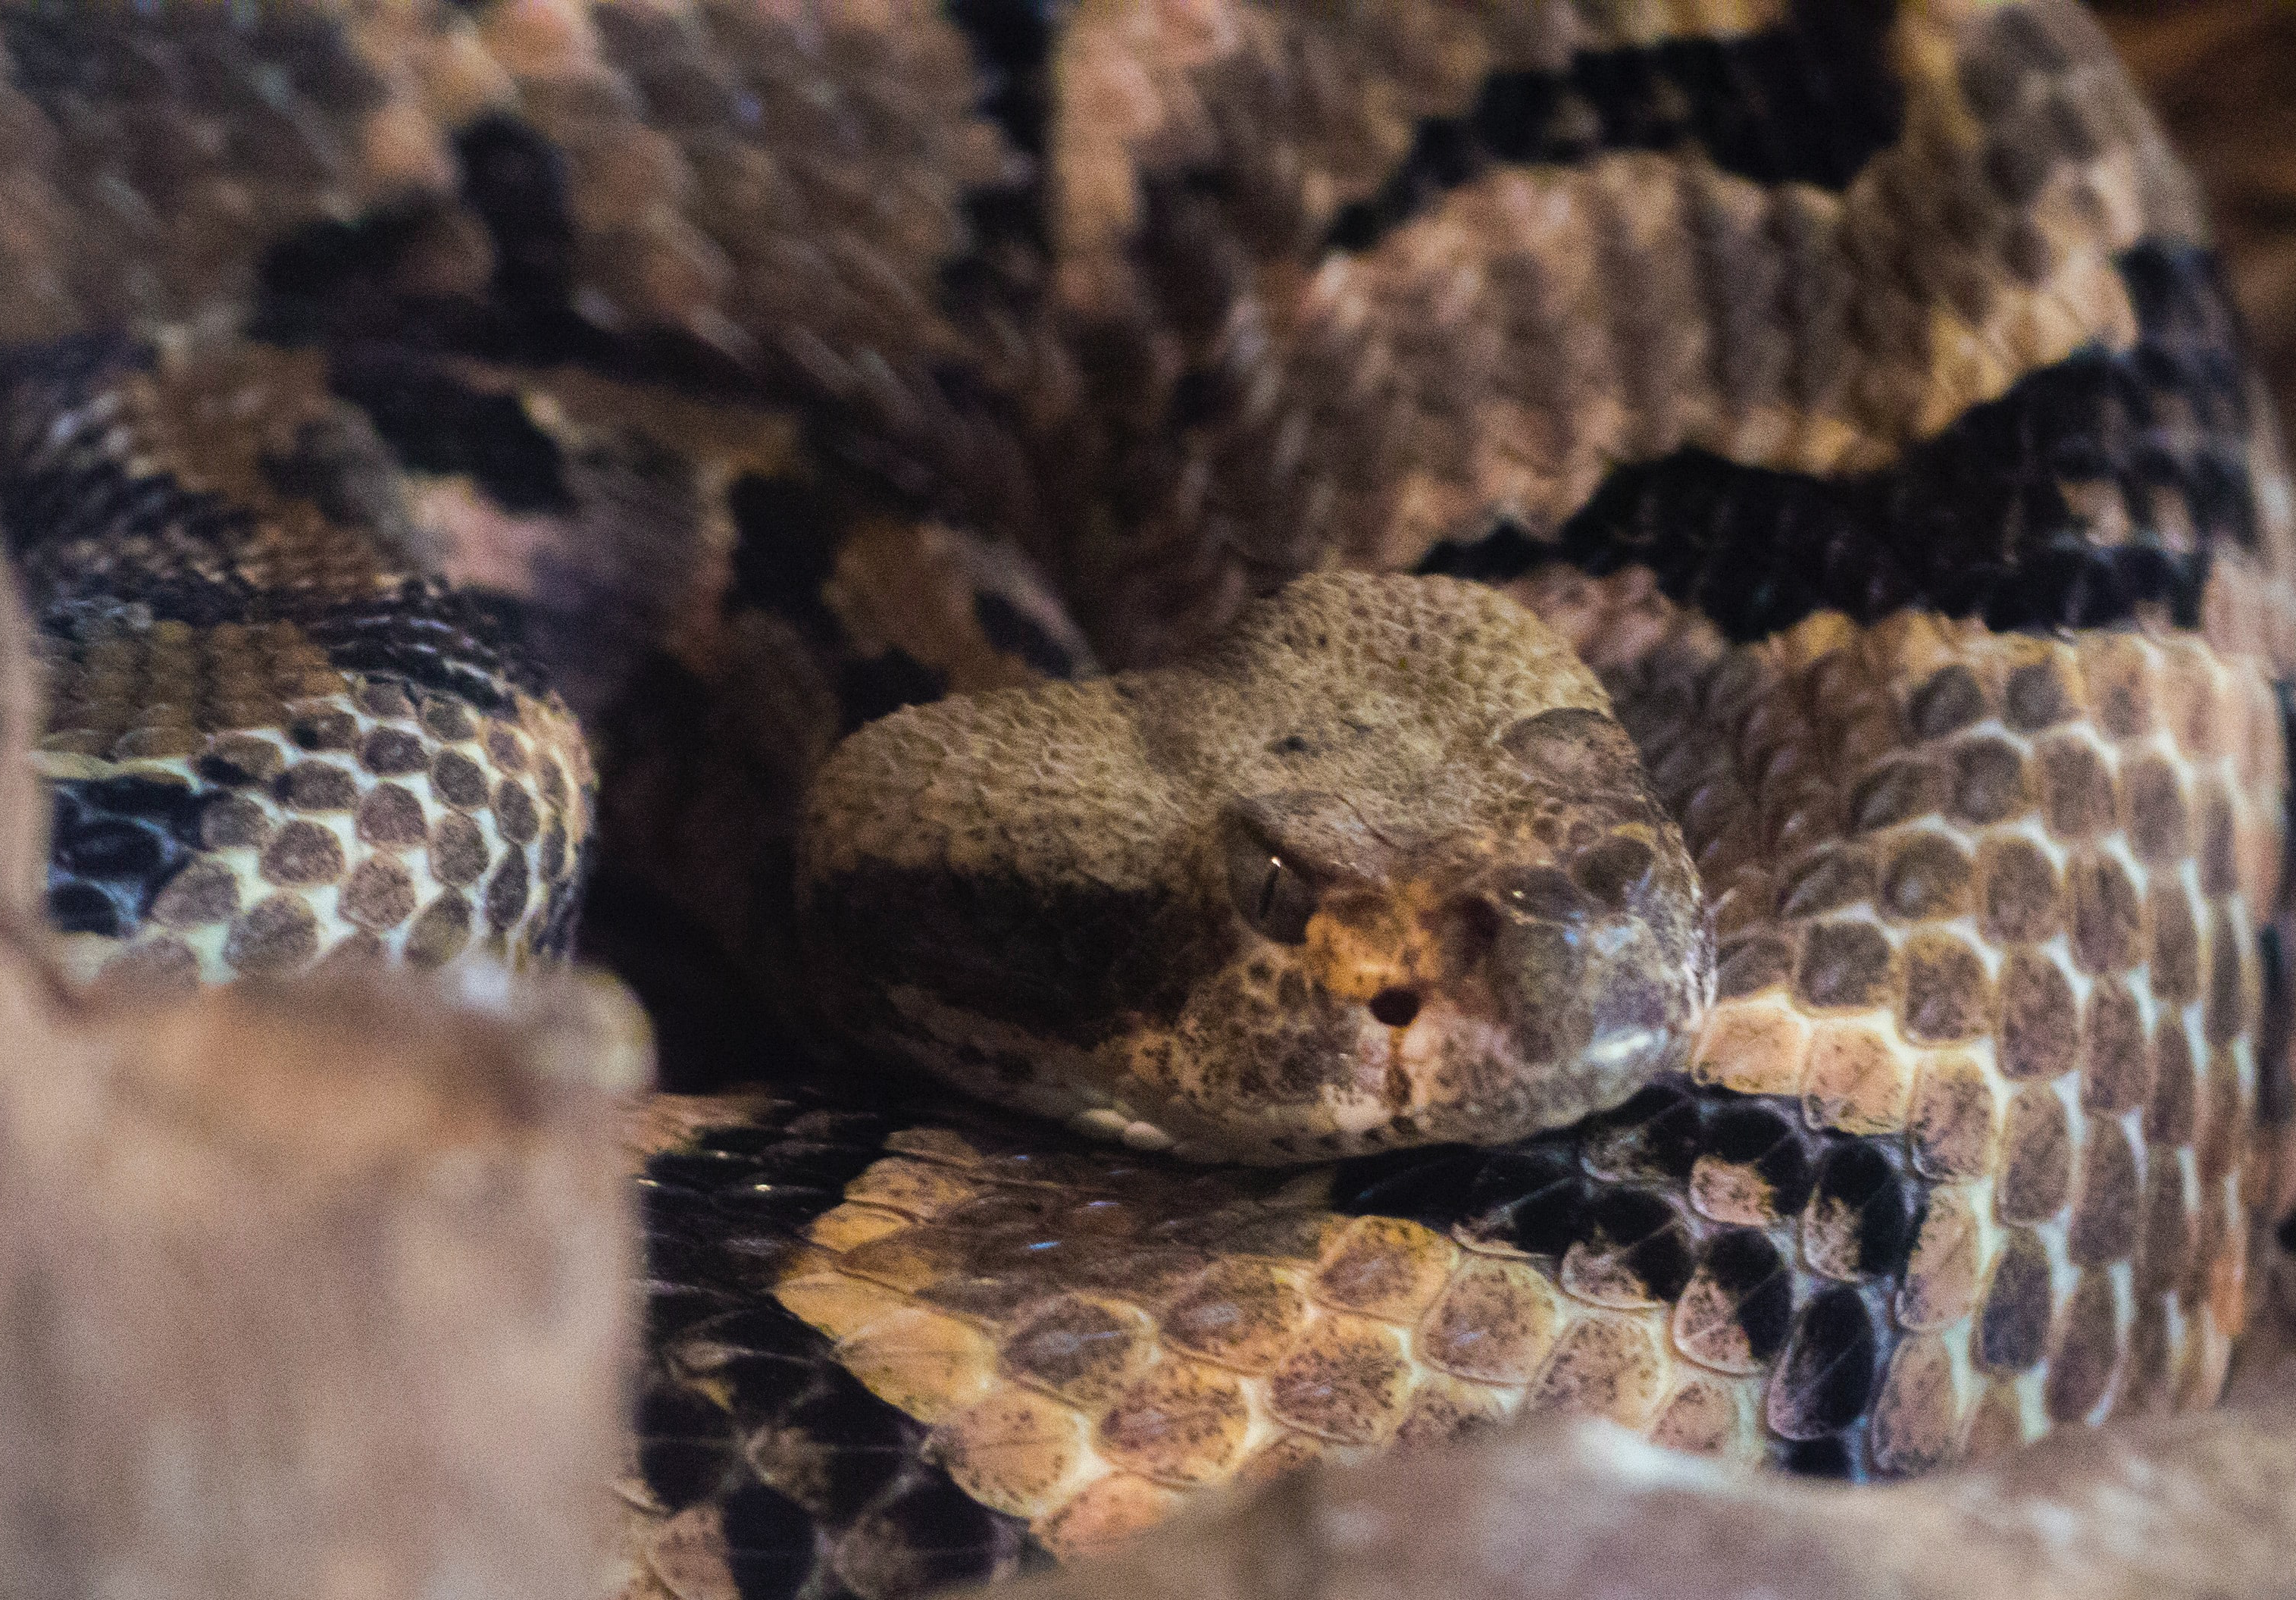 Timber rattlesnake. Photo by De’Andre Bush on Unsplash